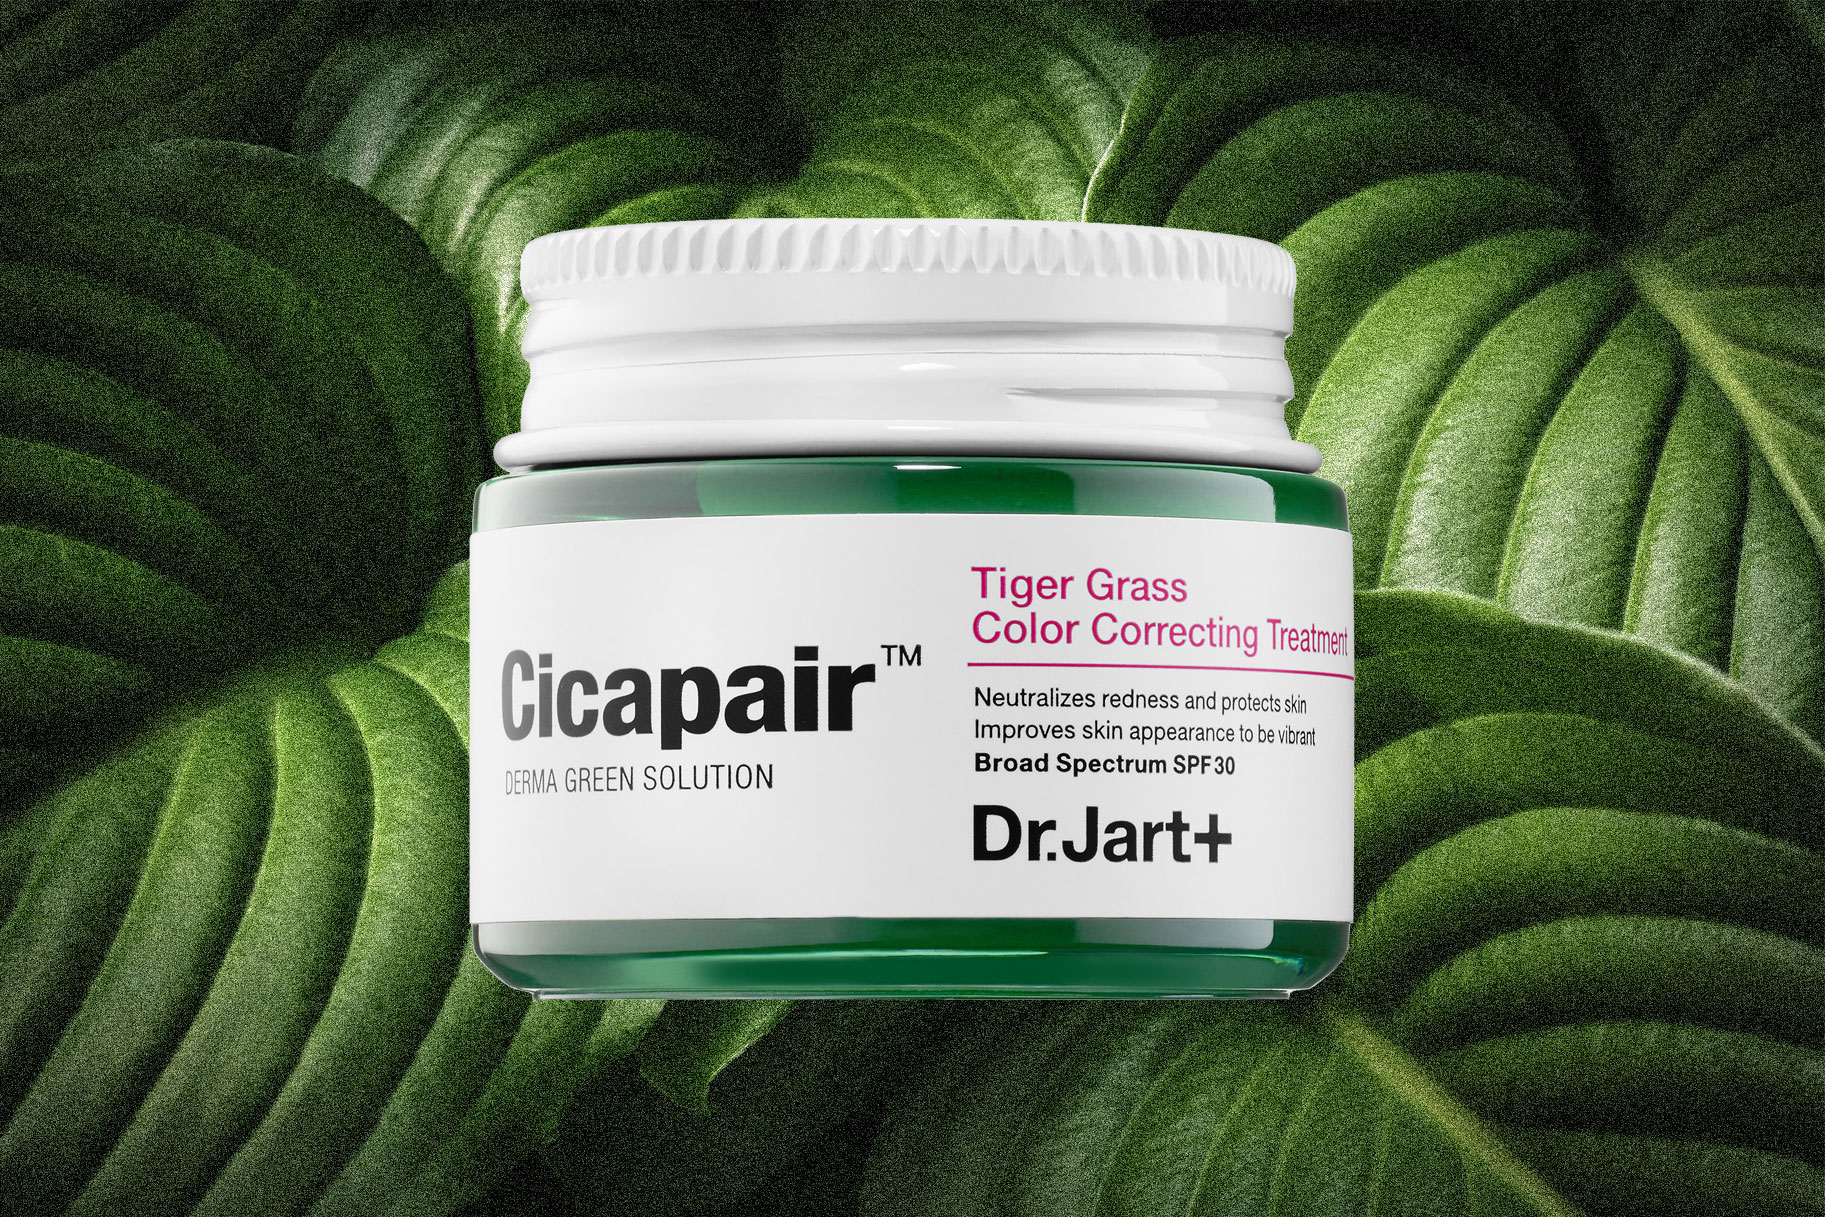 Dr Jart Cicapair Tiger Grass Color Correcting Treatment SPF30